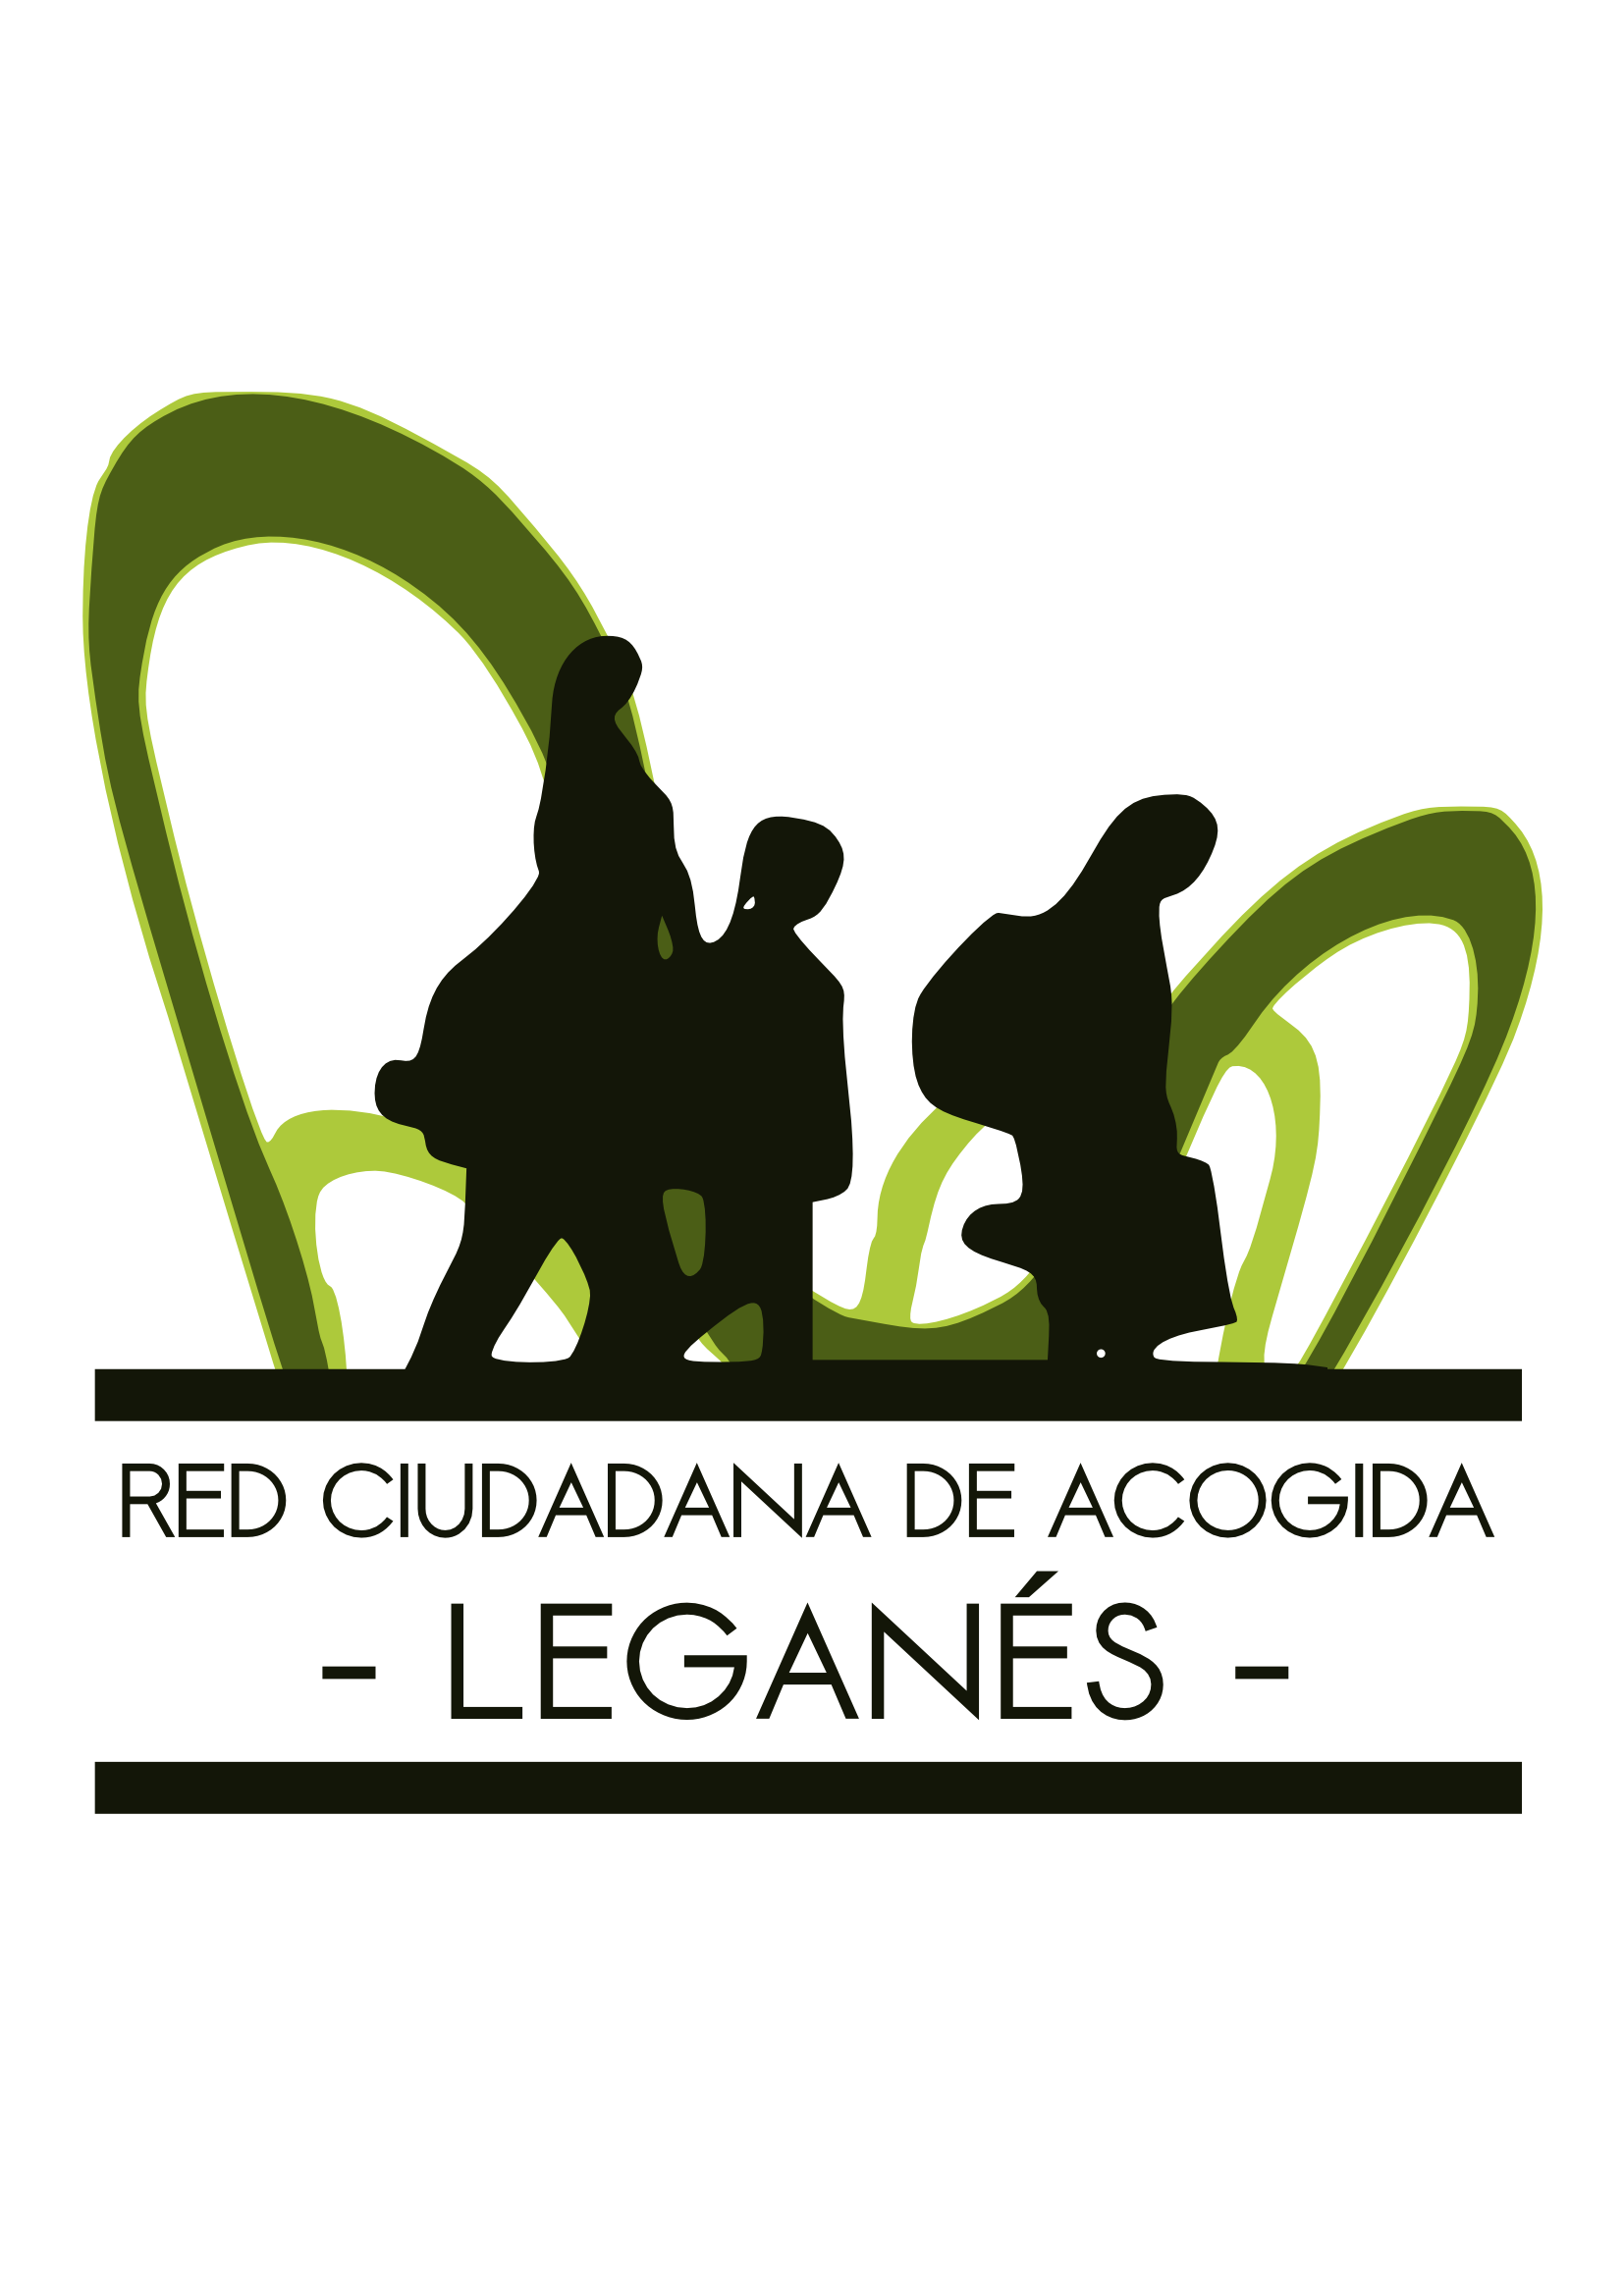 Red Ciudadana de Acogida Leganés